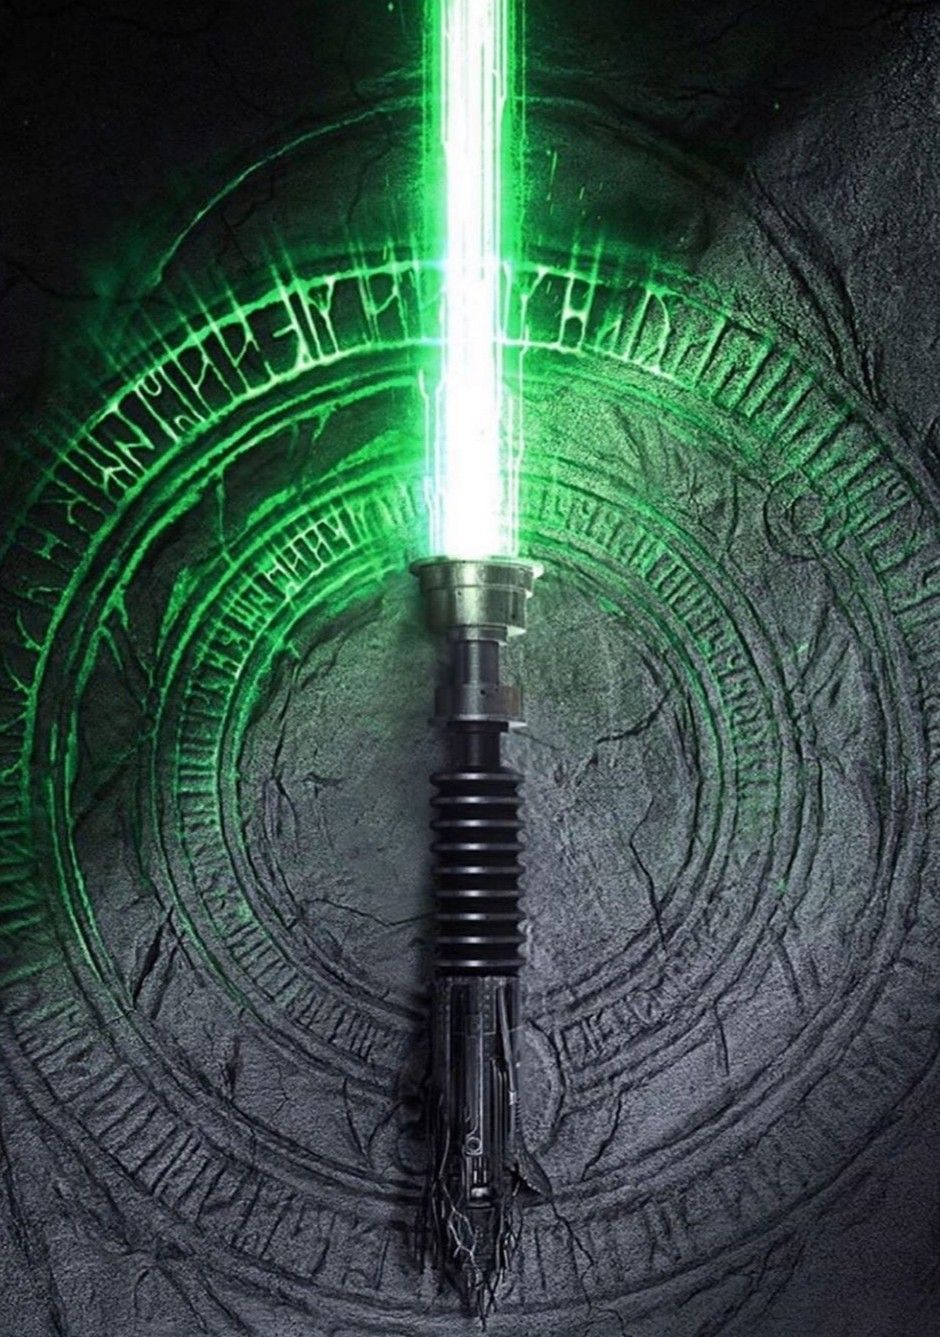 Luke Skywalker Green Lightsaber Wallpapers - Wallpaper Cave